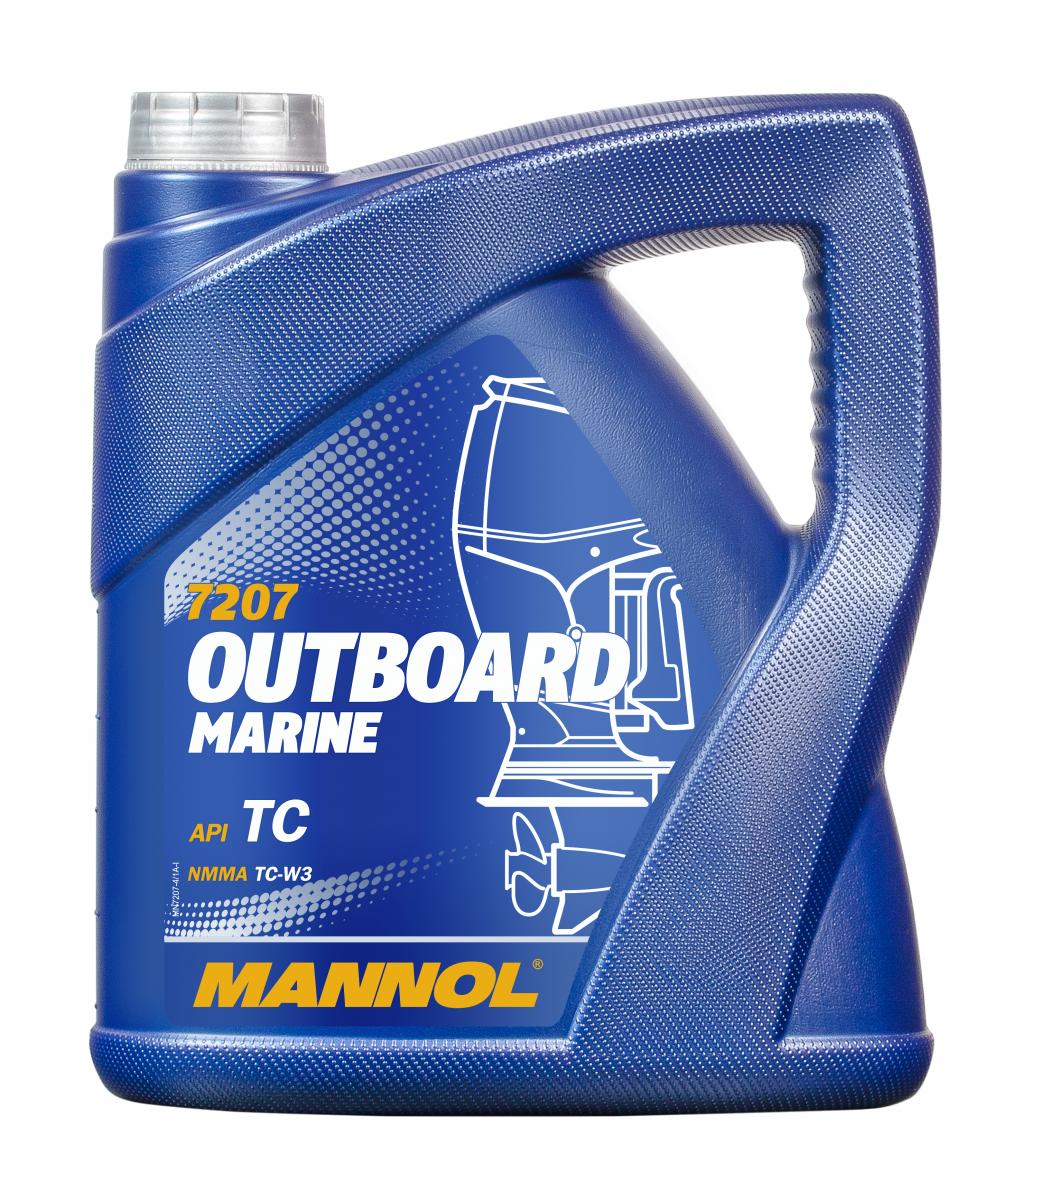 8 Liter (2x4) MANNOL Outboard Marine API TC Motoröl Außenbordmotoröl